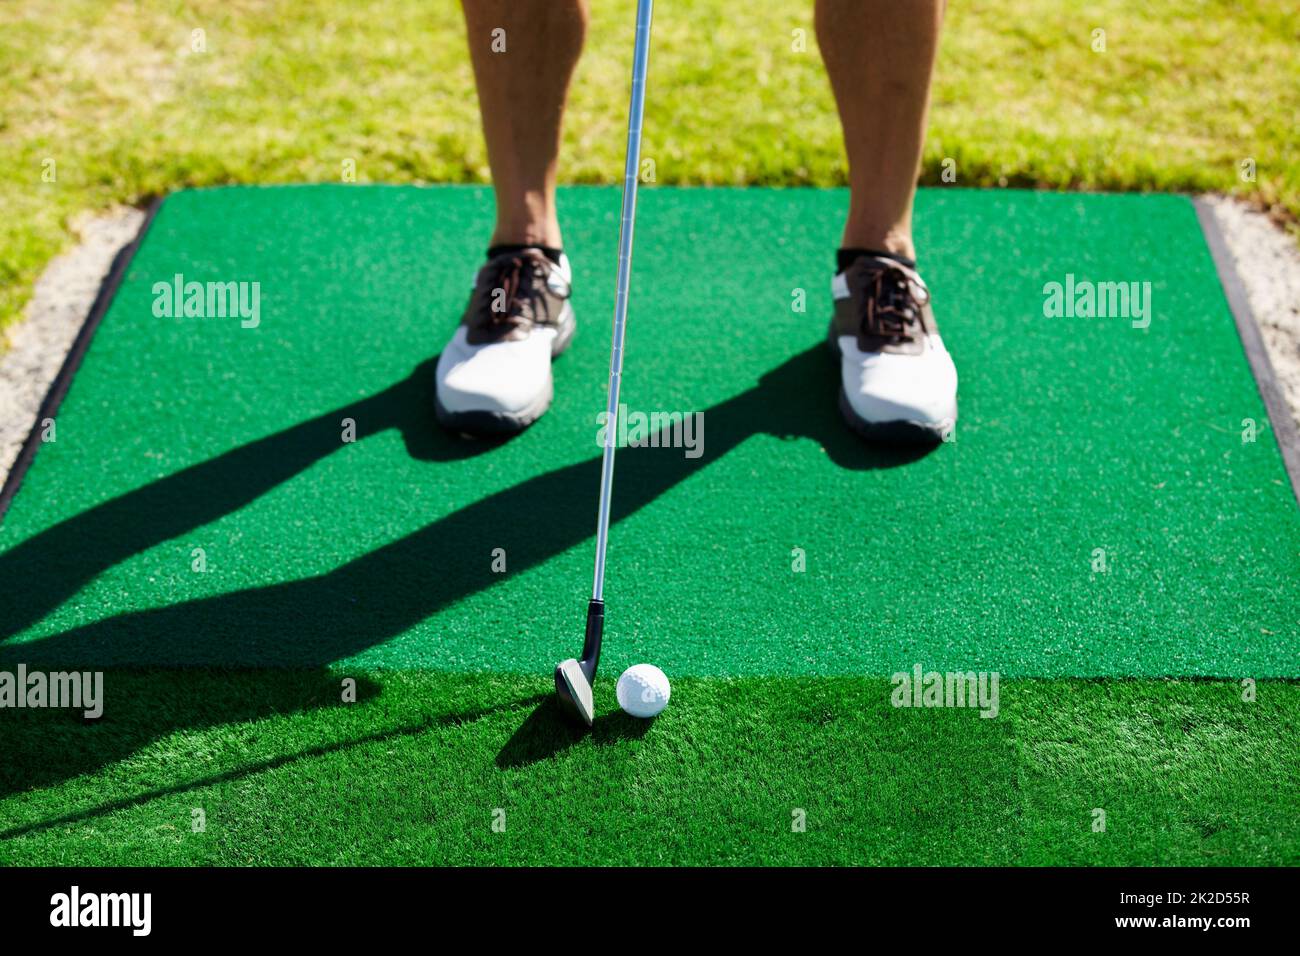 Teeing off. Immagine ritagliata di un golfer circa per tee fuori. Foto Stock